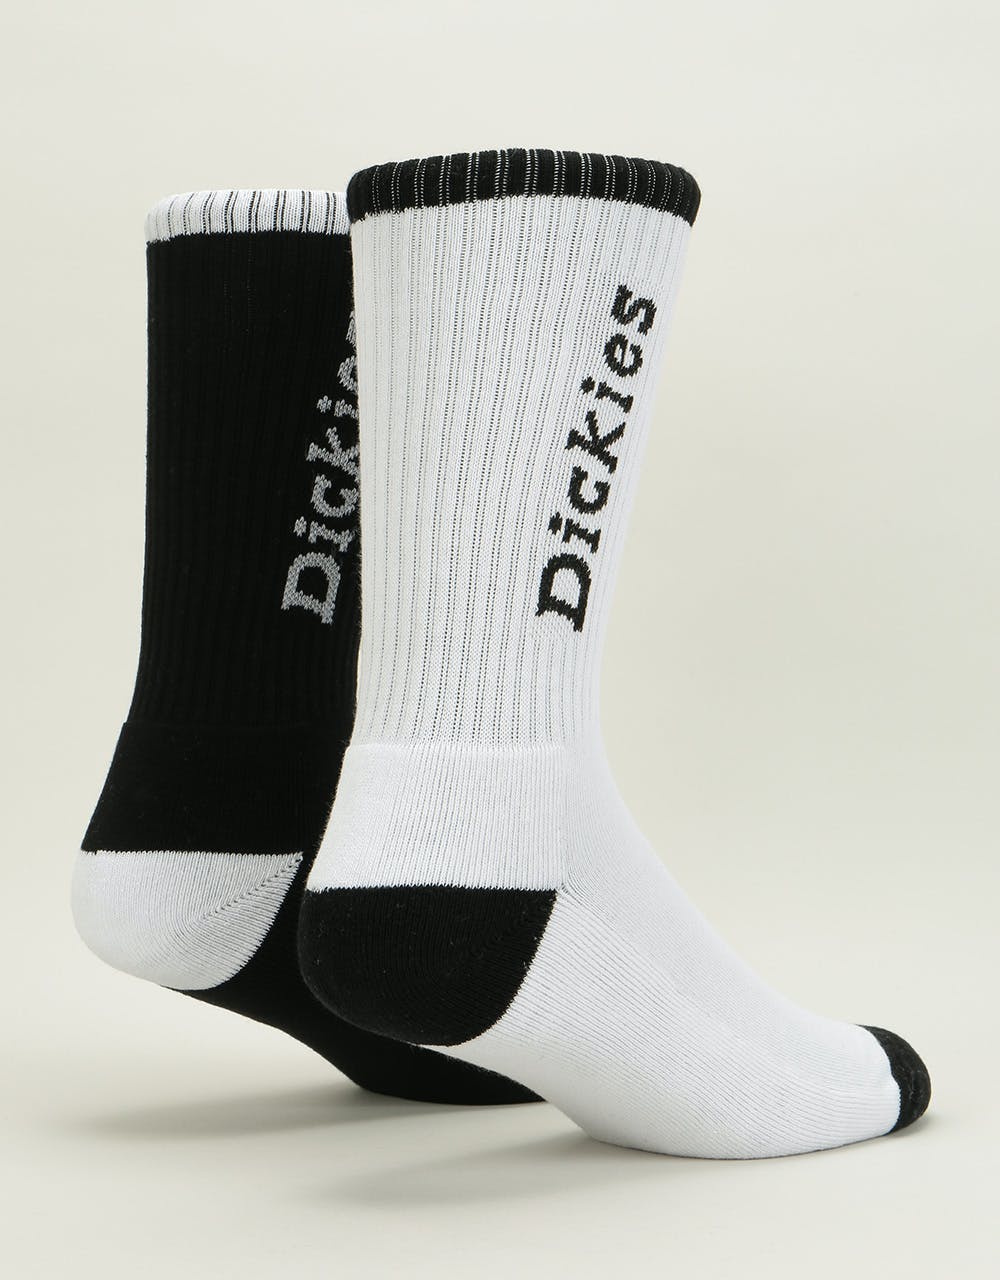 Dickies Calvert City 2-Pack Socks - Assorted